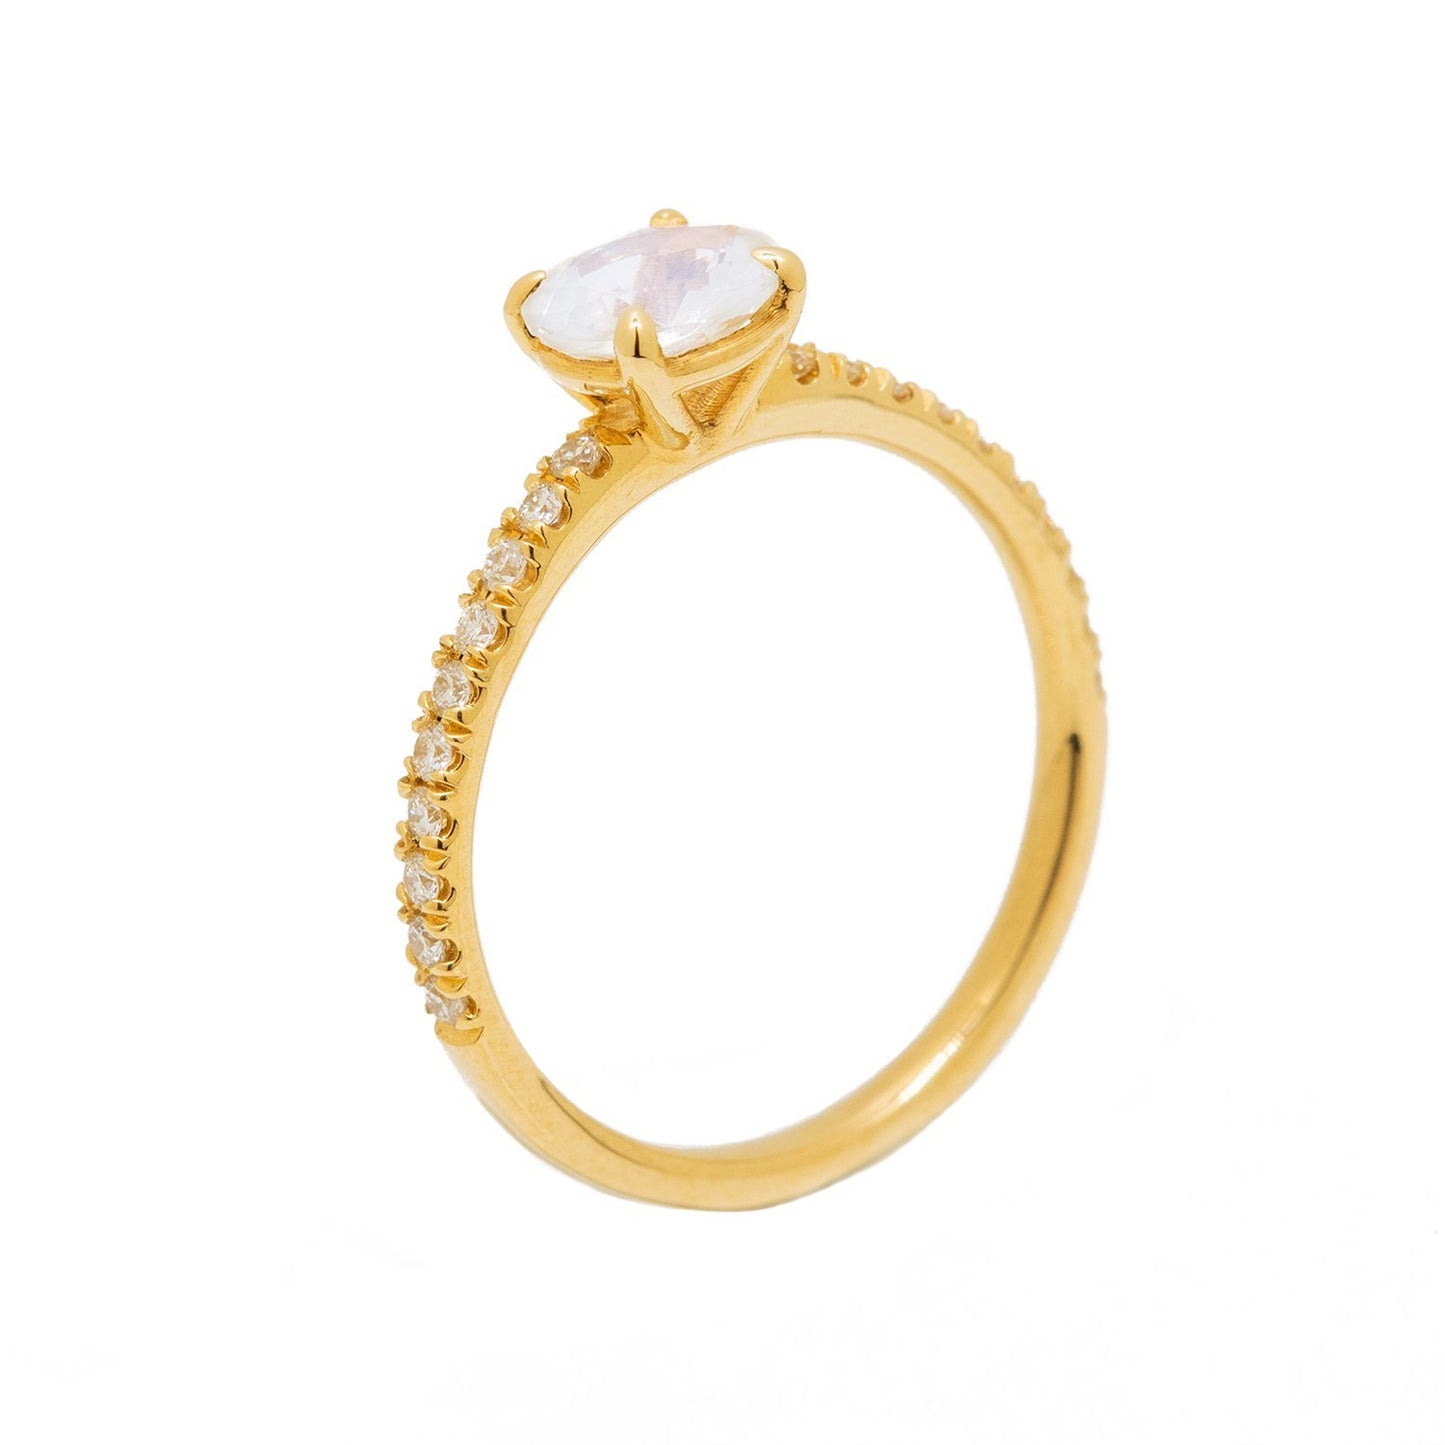 Moonstone & Diamond Engagement Ring - Kingdom Jewelry